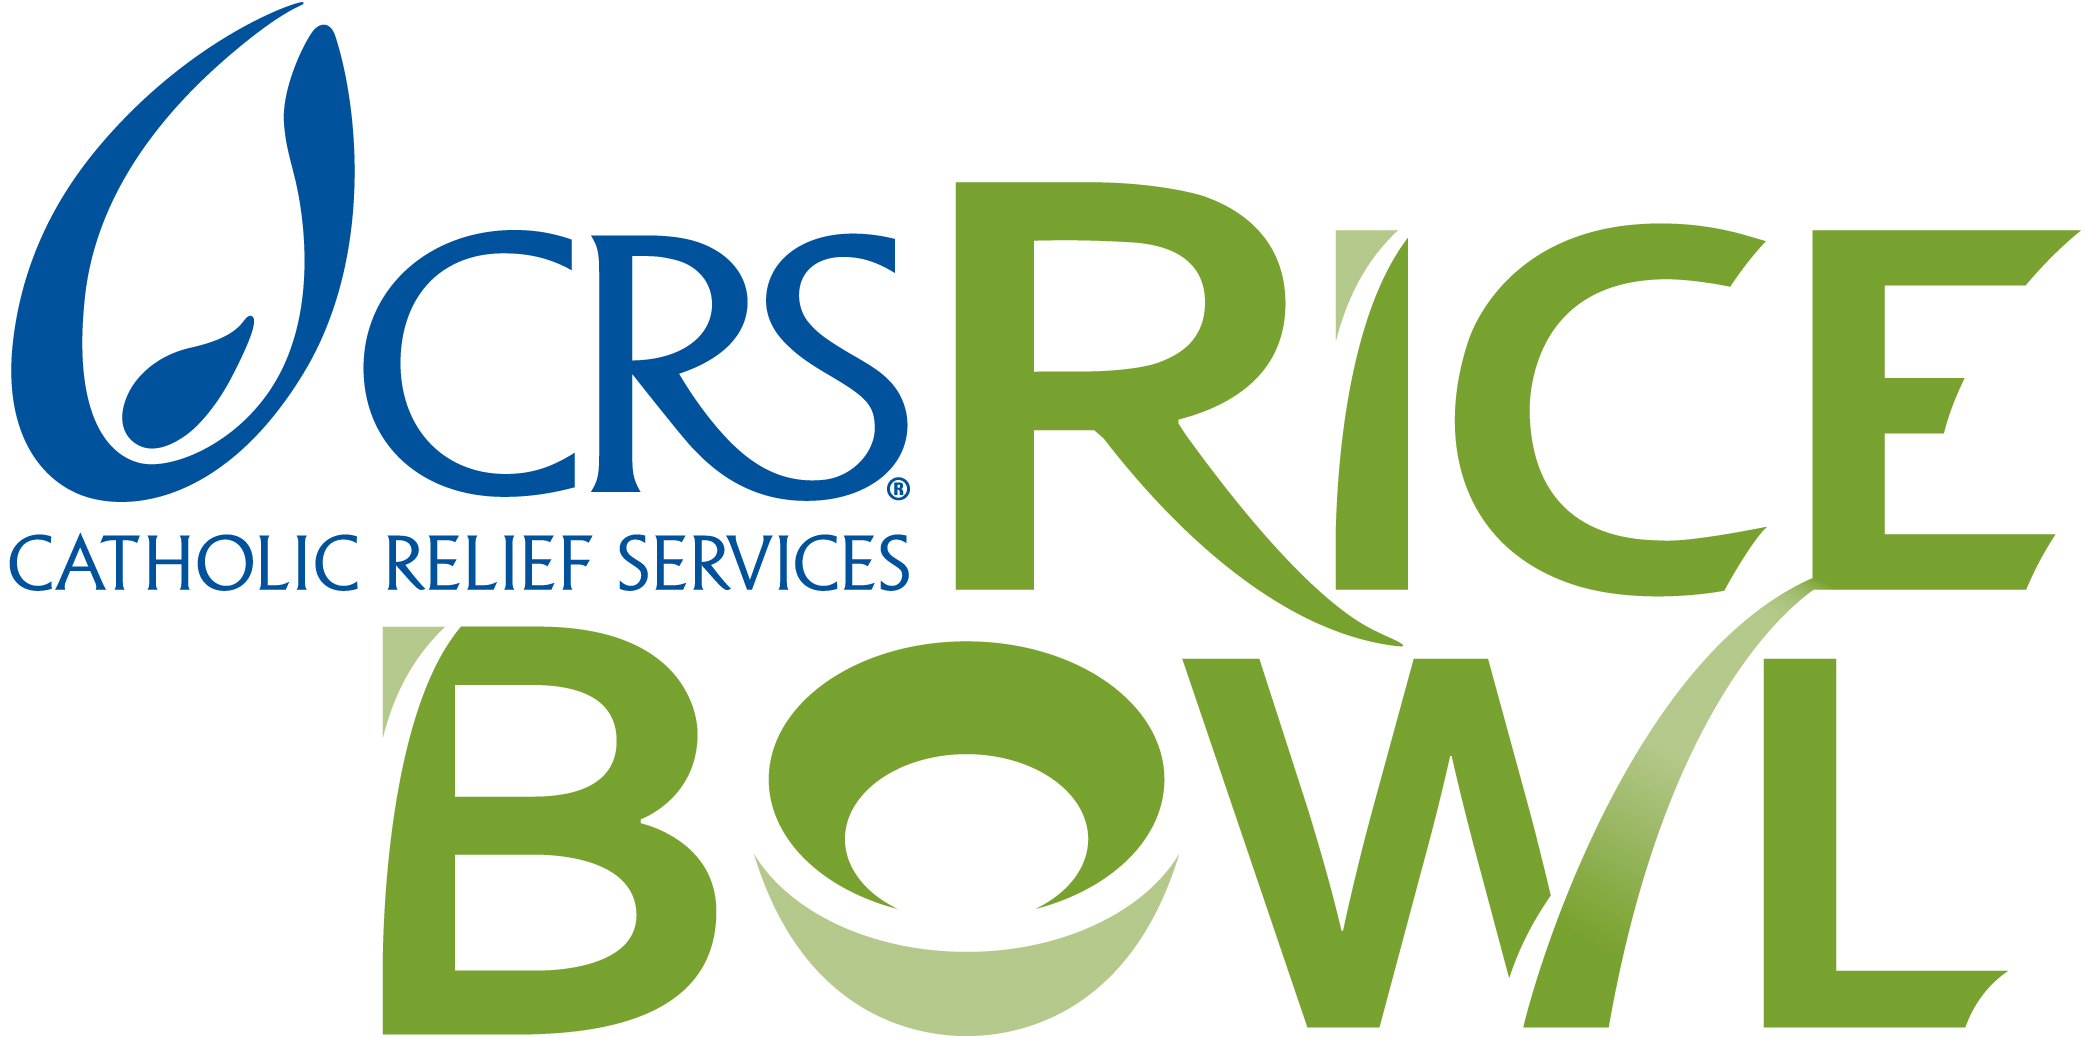 Catholic Relief Services  Popular Lenten Rice Bowl Campaign Is